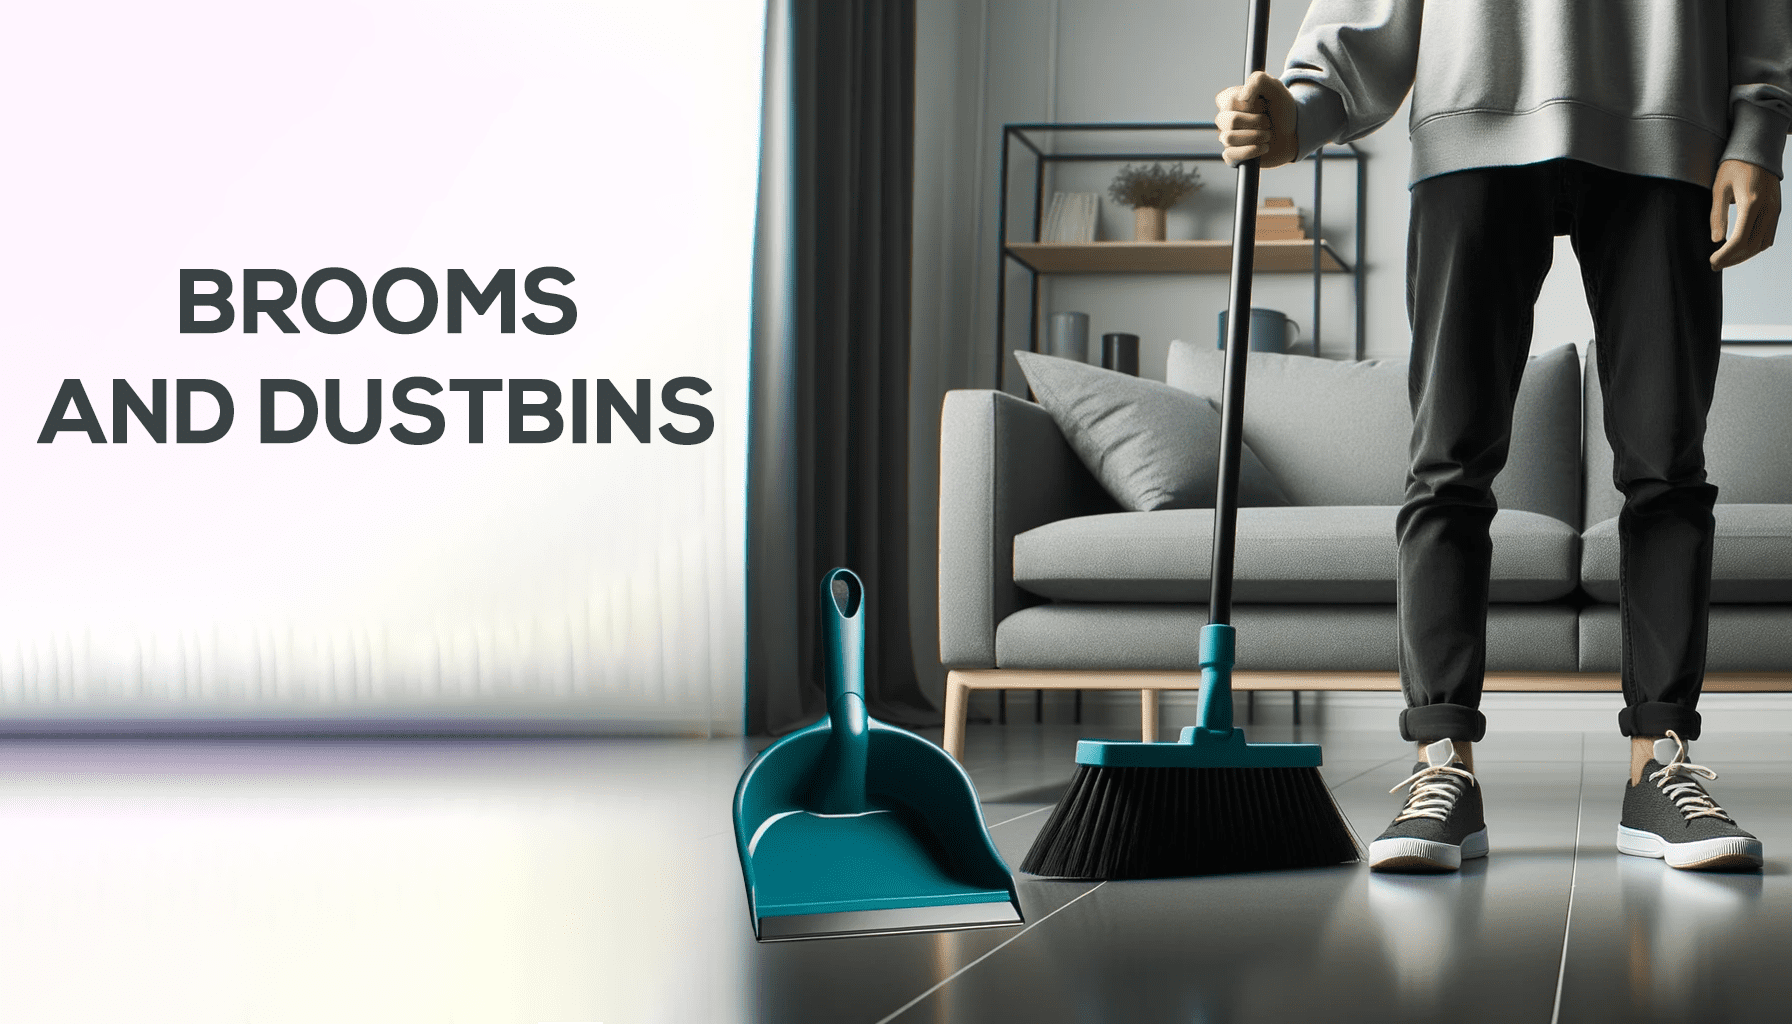 Brooms and dustbins copy 1